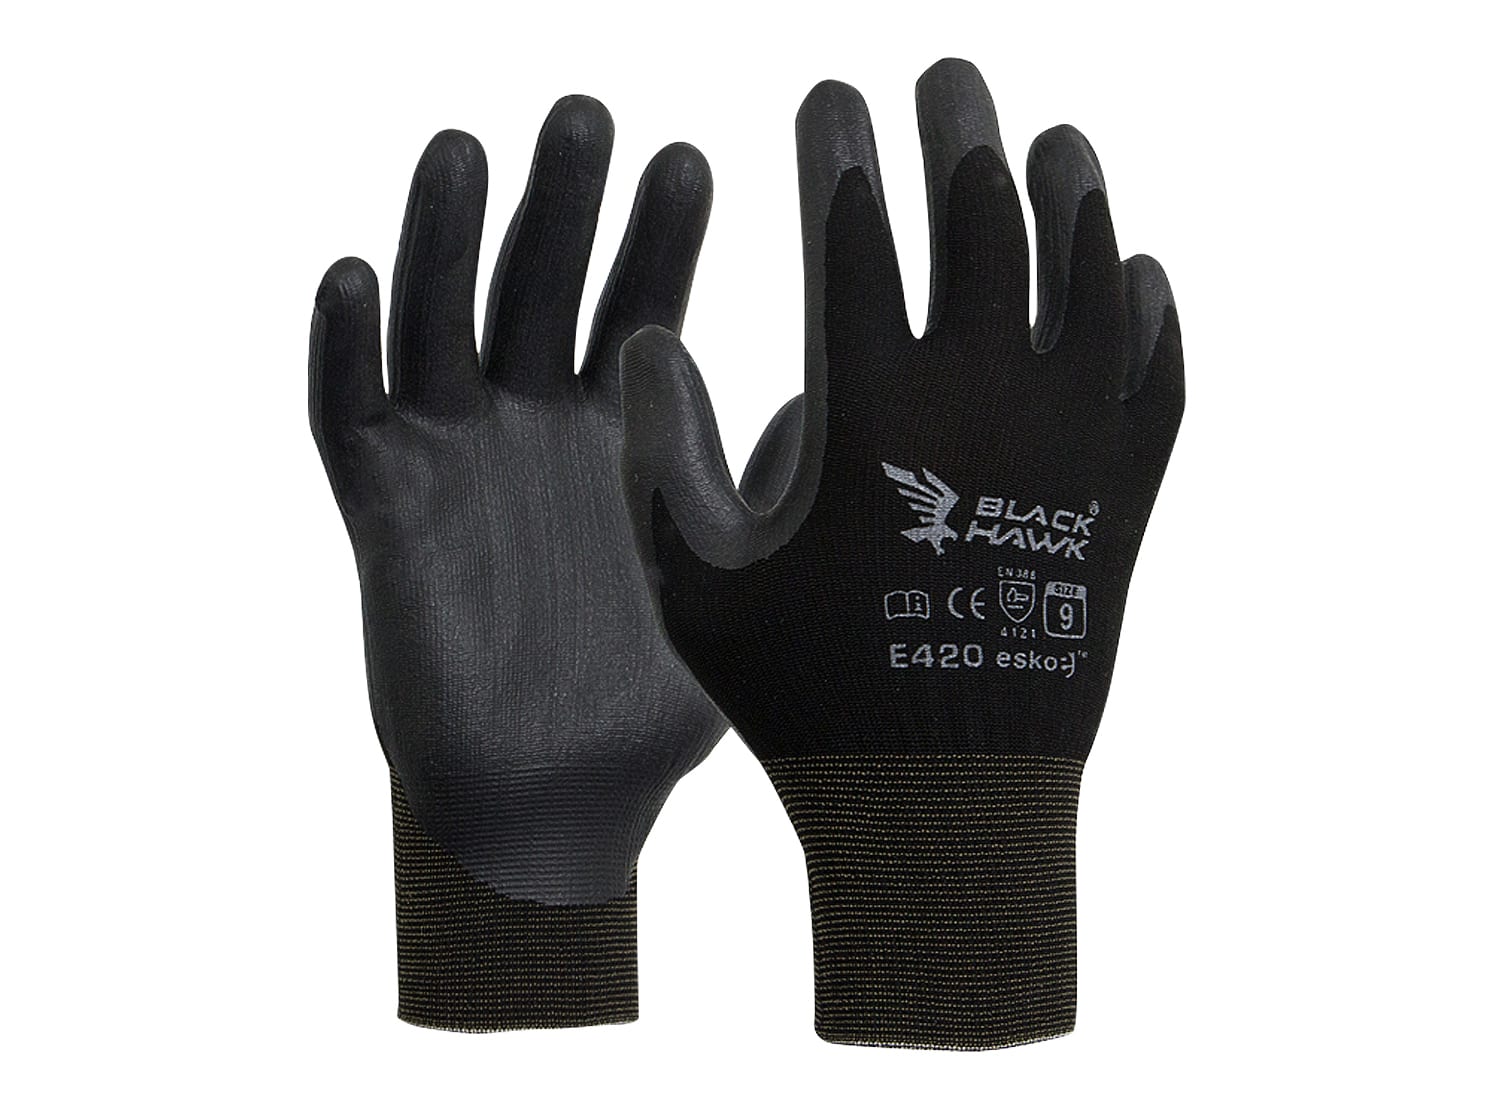 BLACK HAWK Glove, Black polyamide with black foam nitrile coating Size 7(S) E420